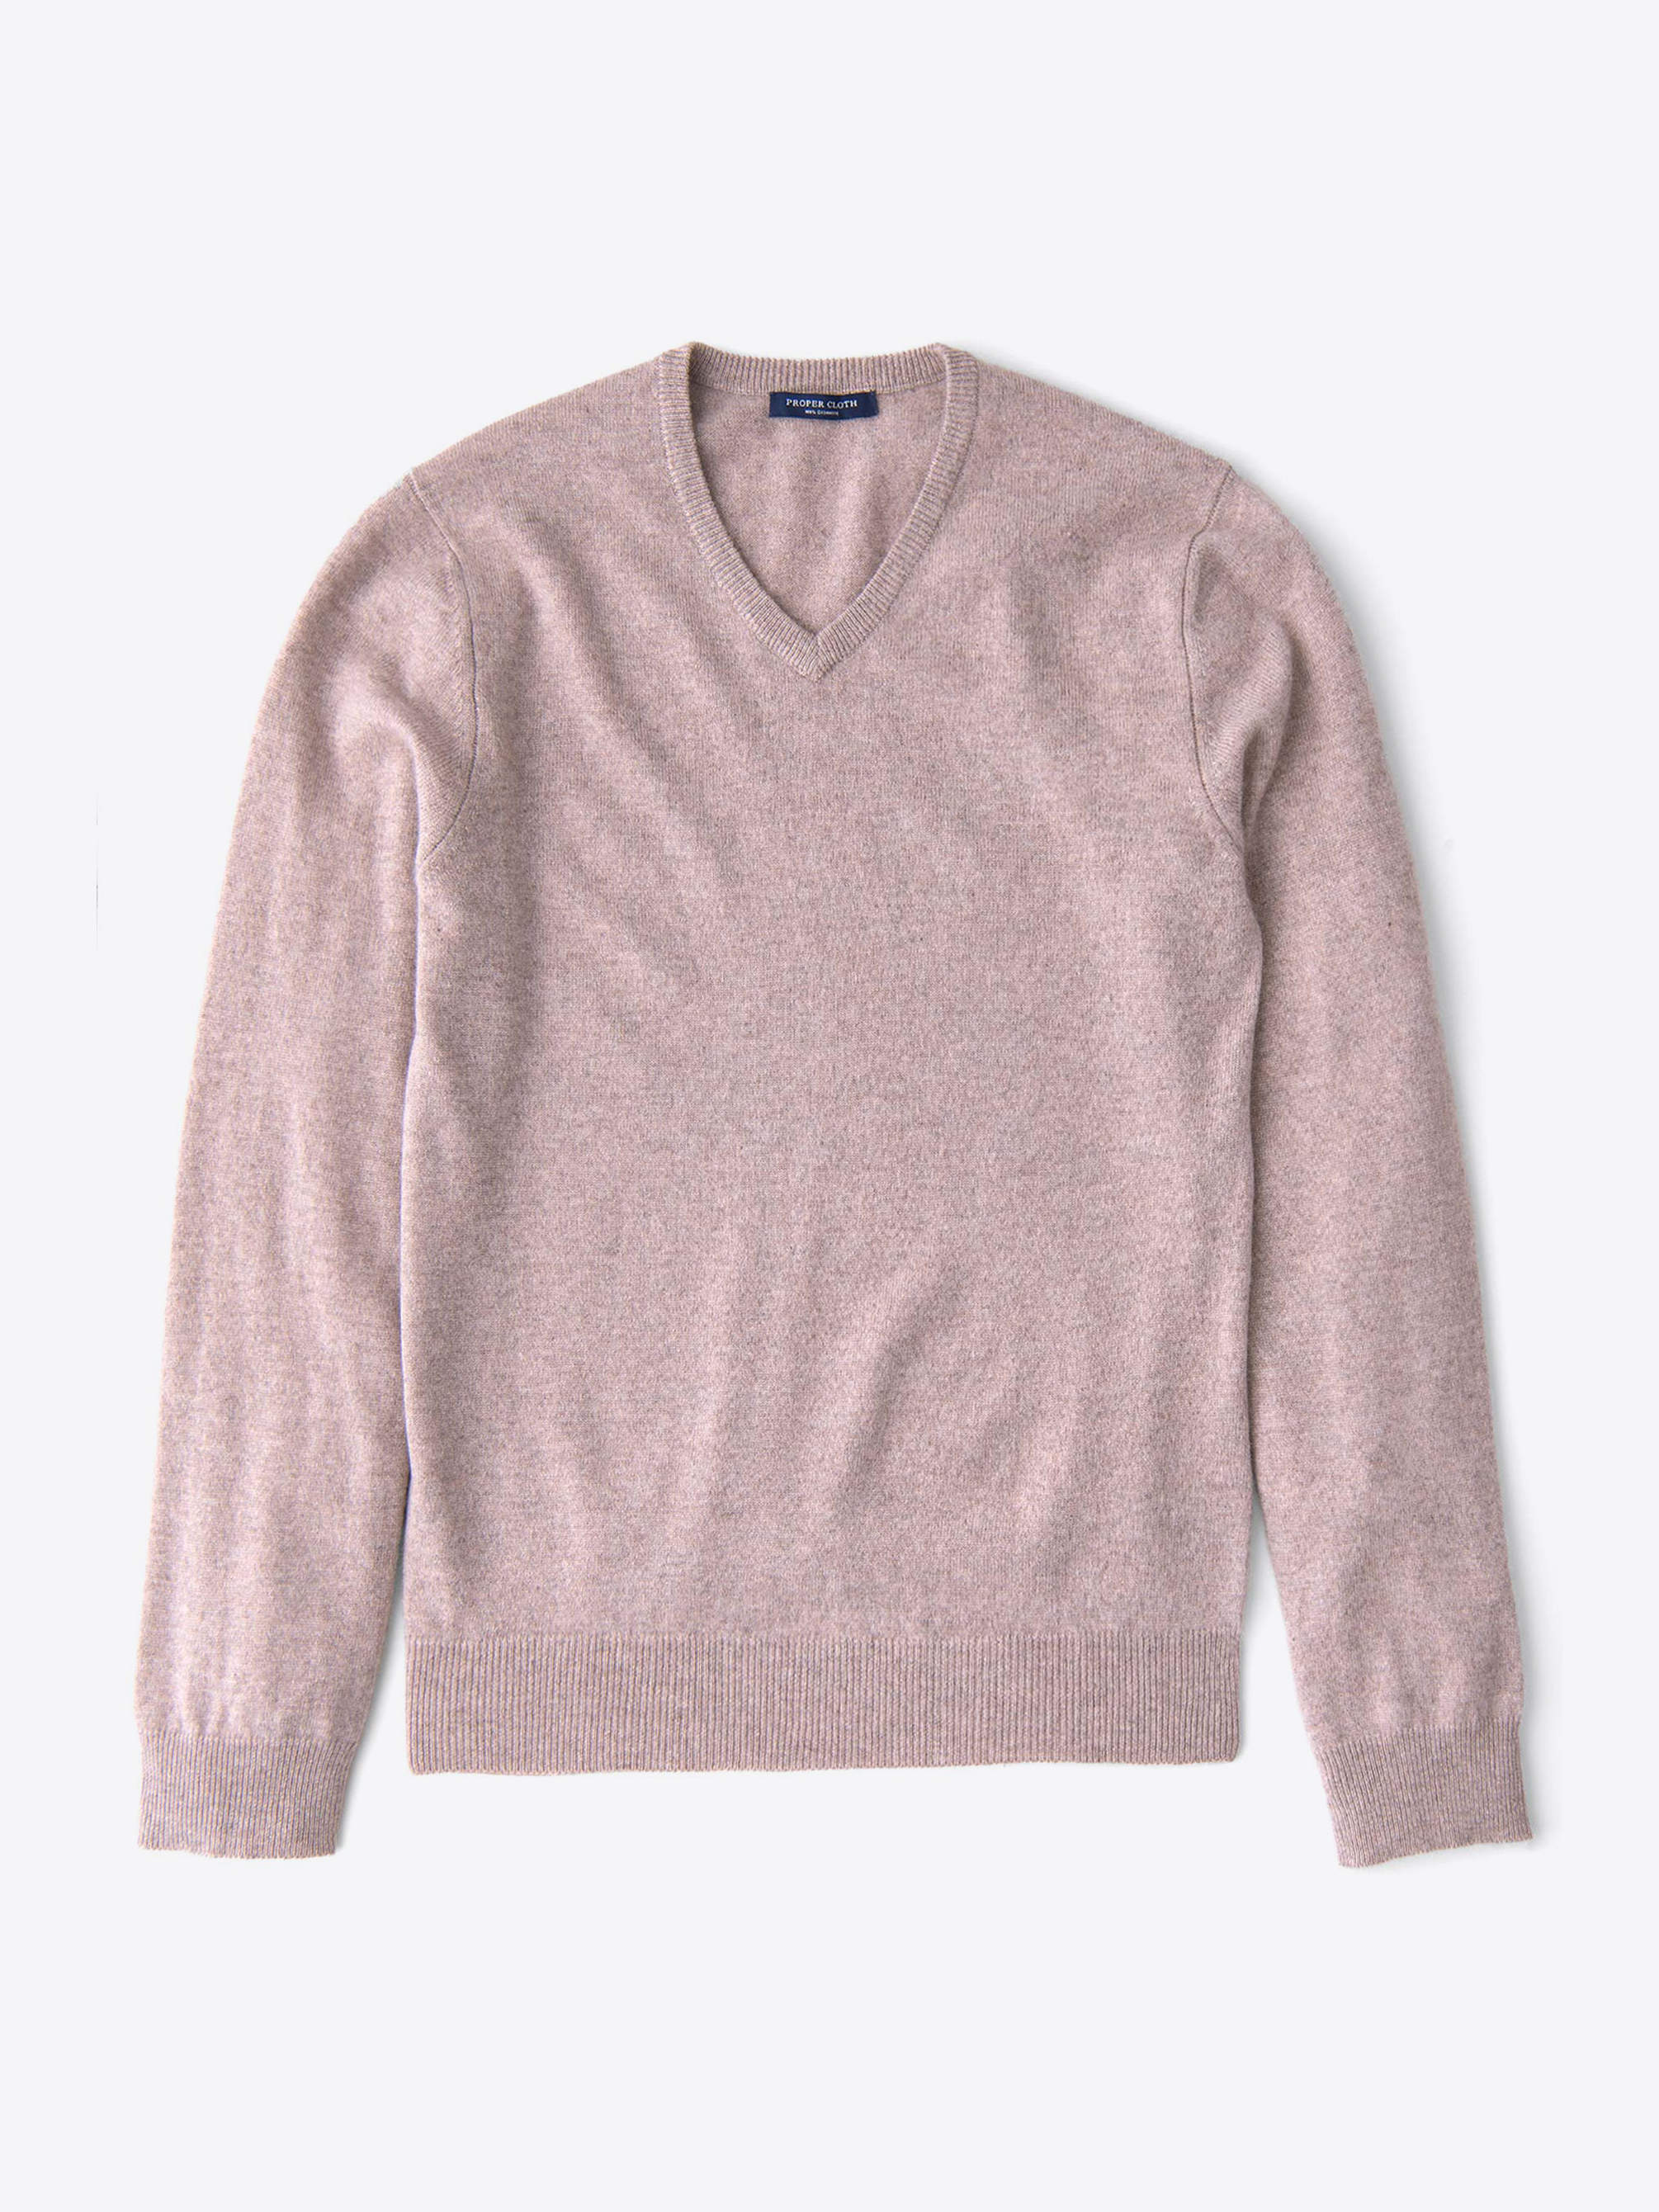 Zoom Image of Beige Cashmere V-Neck Sweater